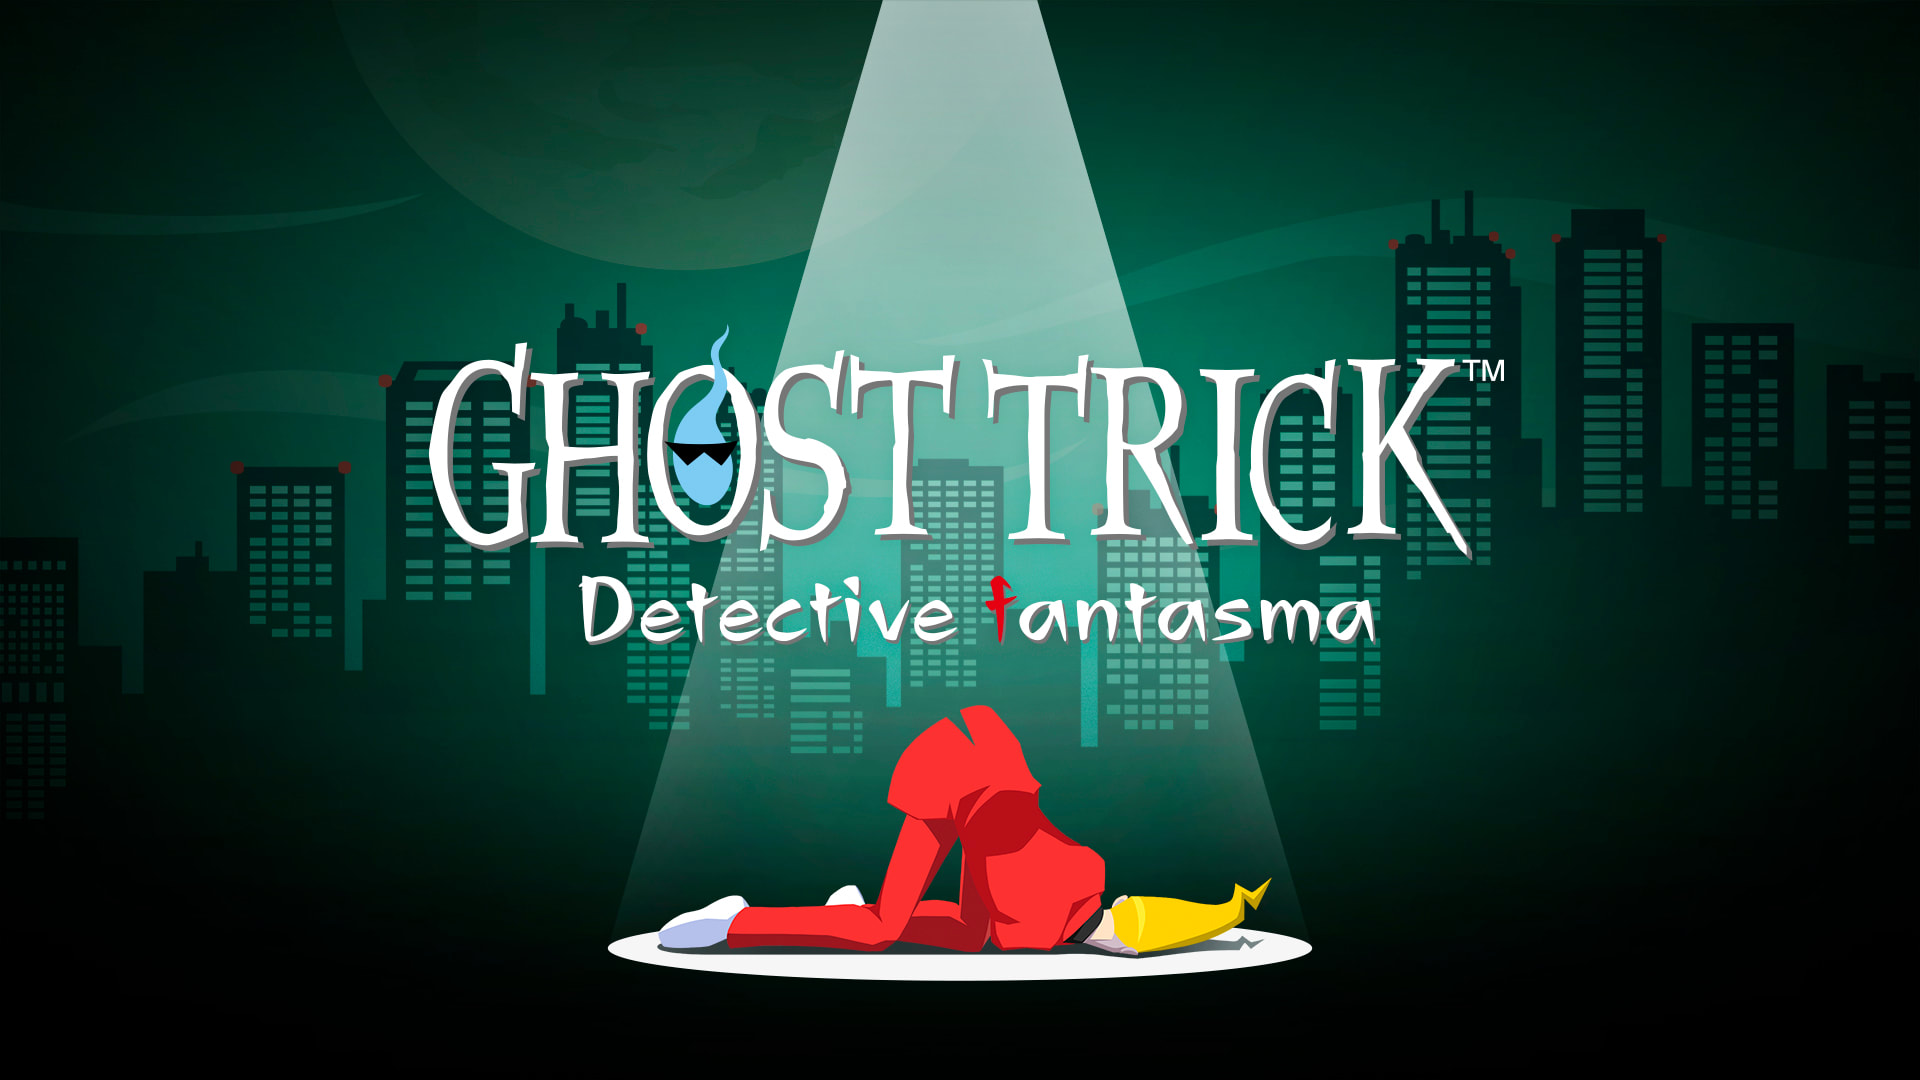 Ghost Trick: Detective fantasma 1